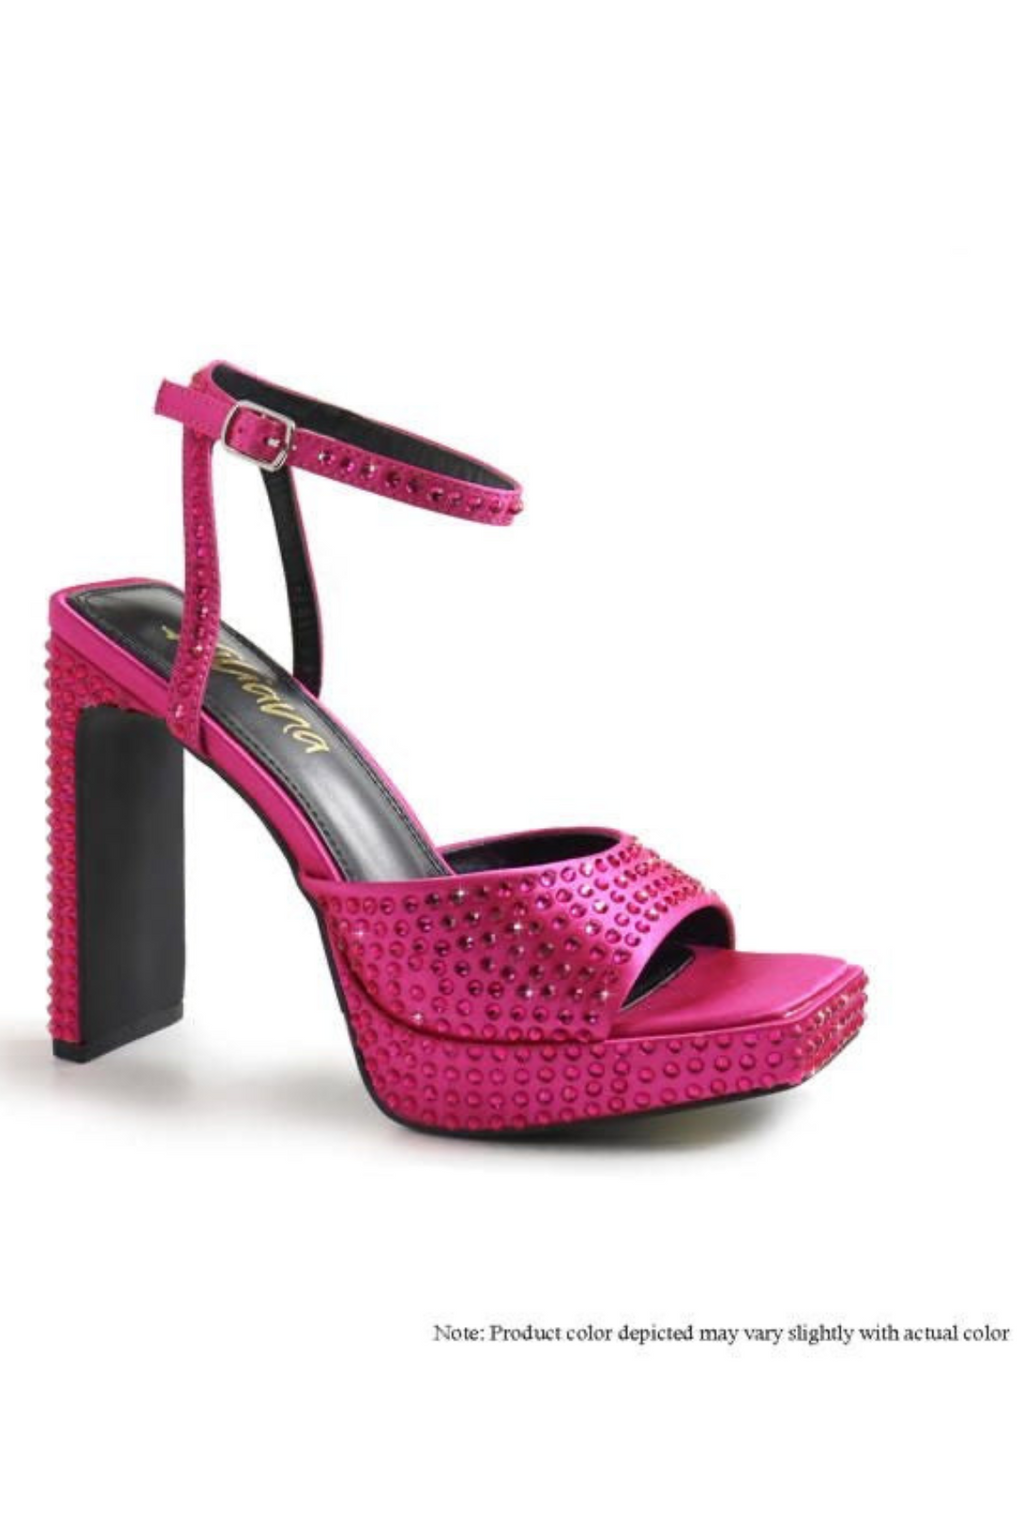 Rhinestone Platform Dress Shoes (Hot Pink)